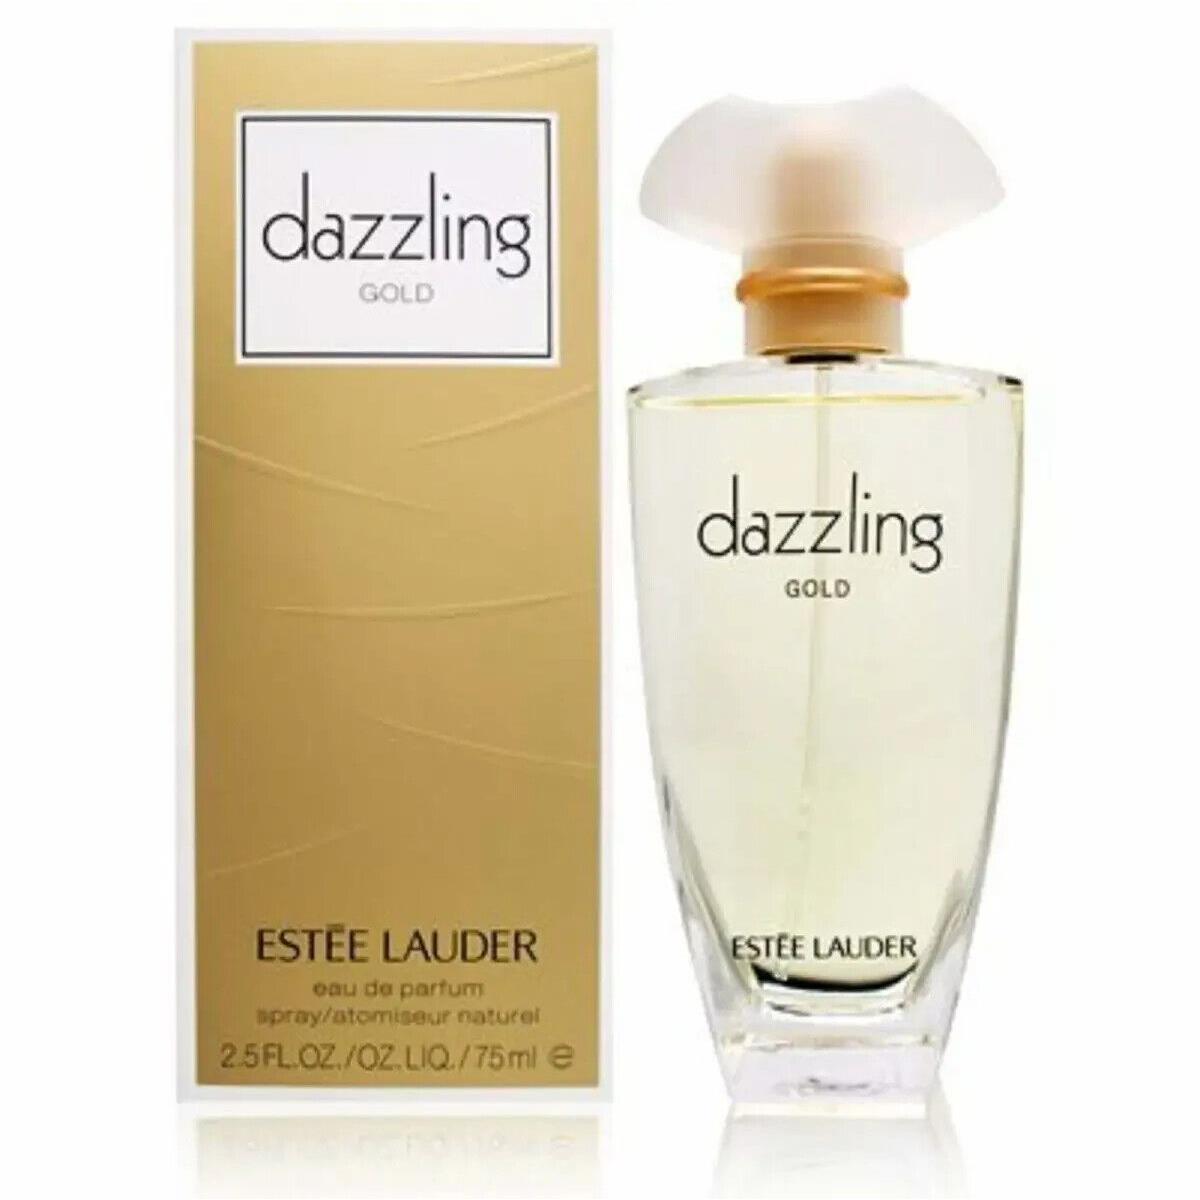 Estee Lauder Dazzling Gold Eau de Parfum 75ml / 2.5oz Spray